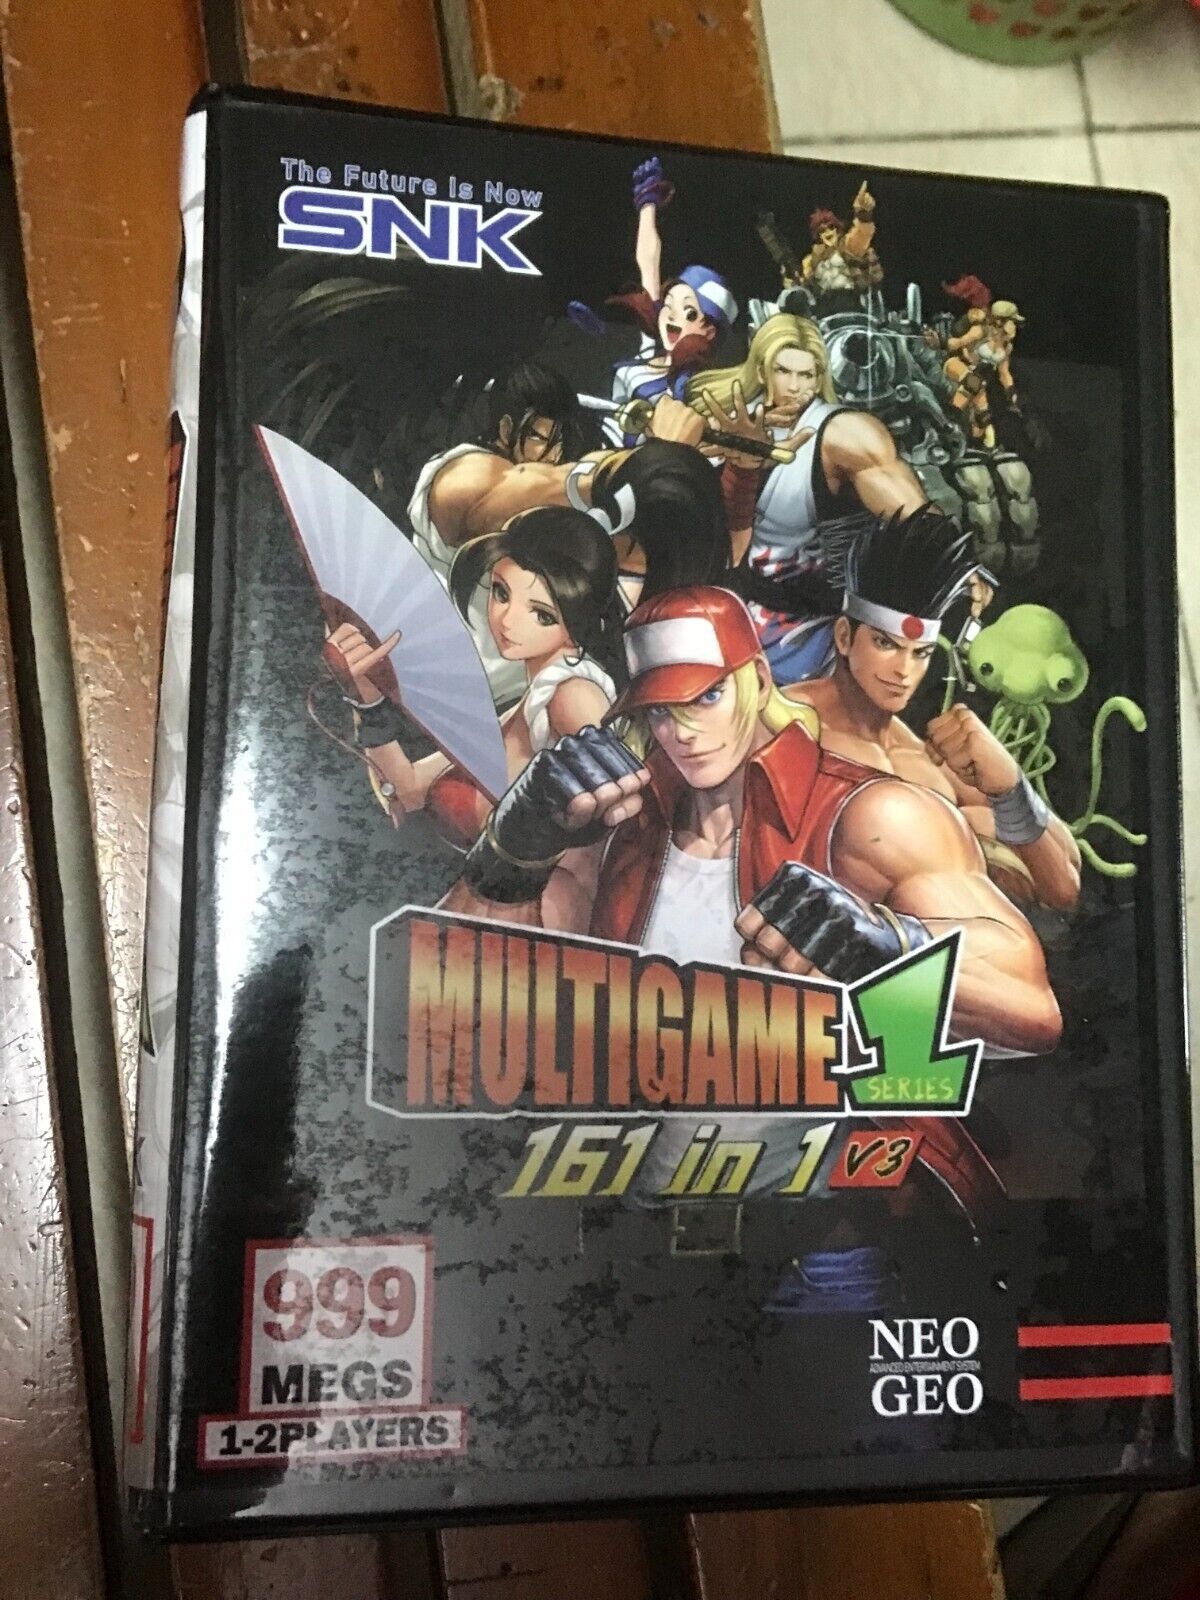 SNK NEOGEO mvs 161 in 1 game card (with box)